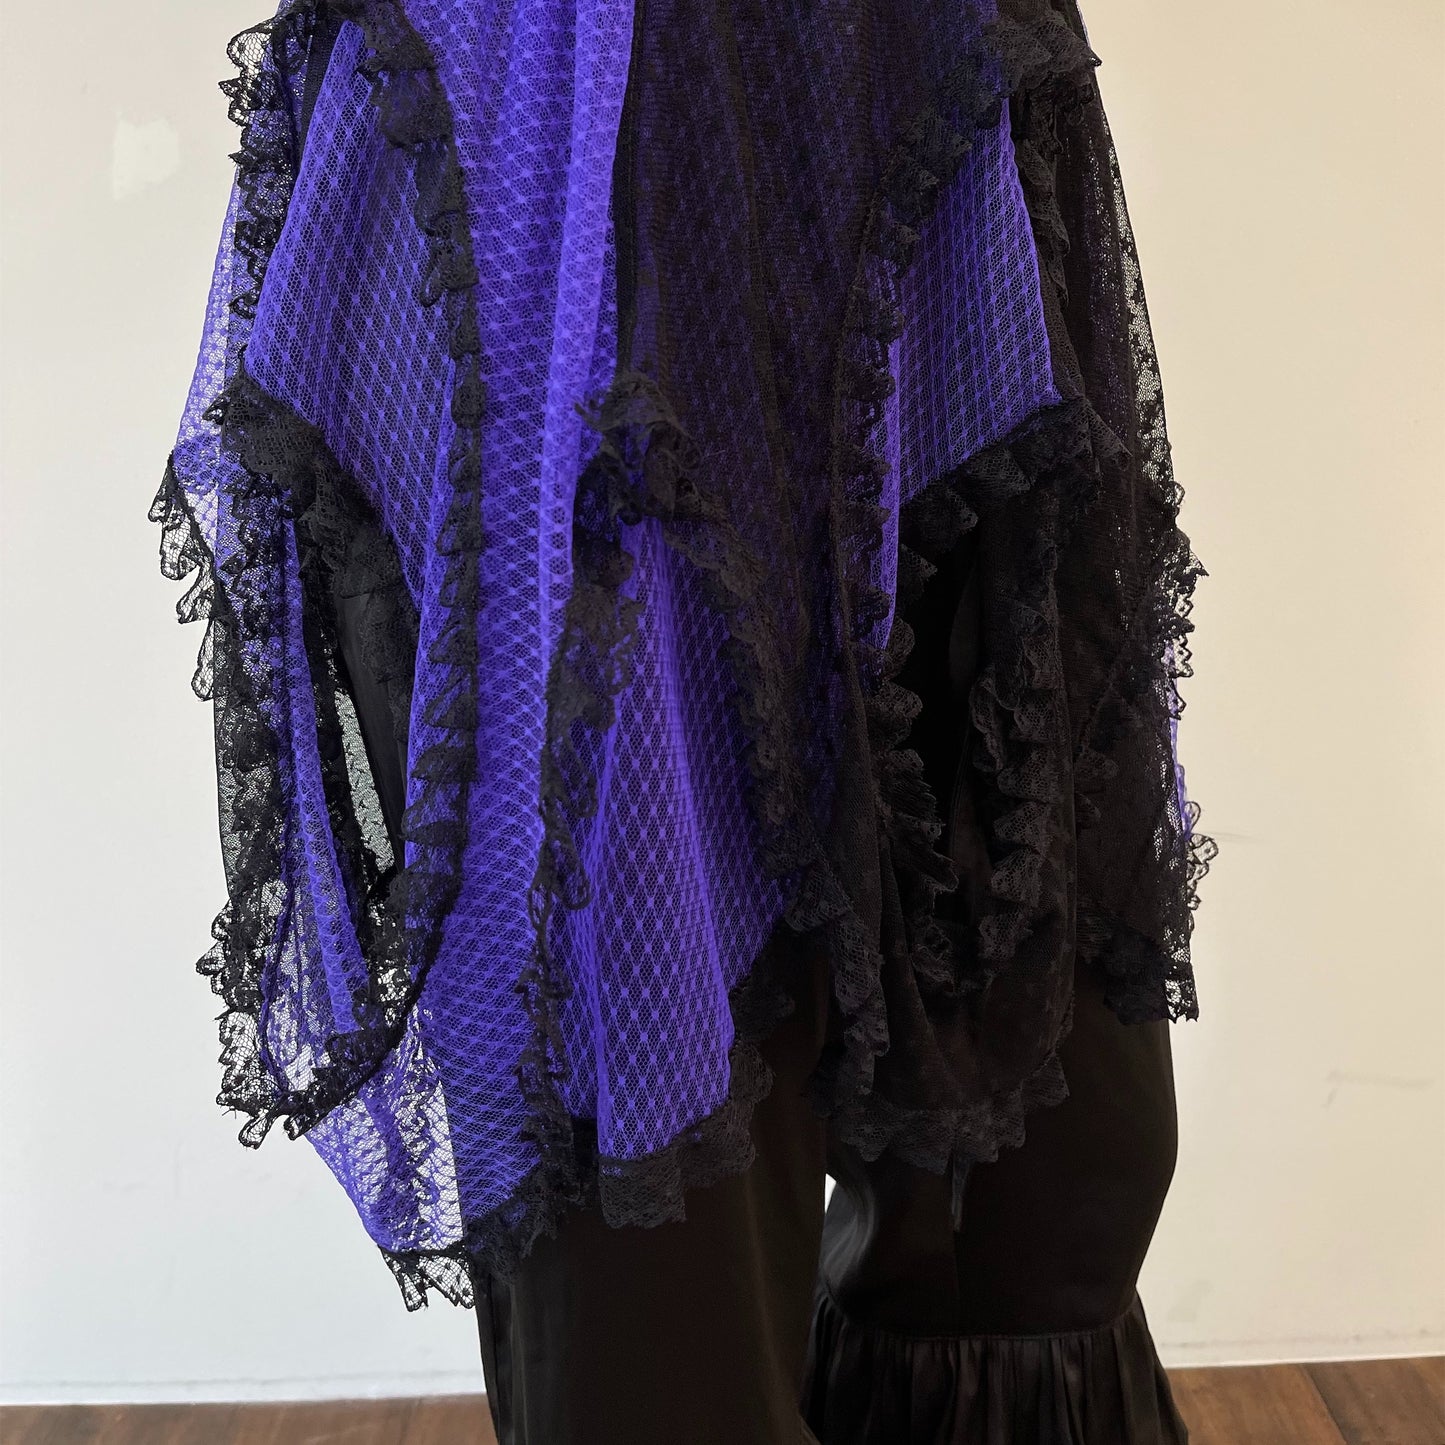 Short skirt / purple / チュールスカート